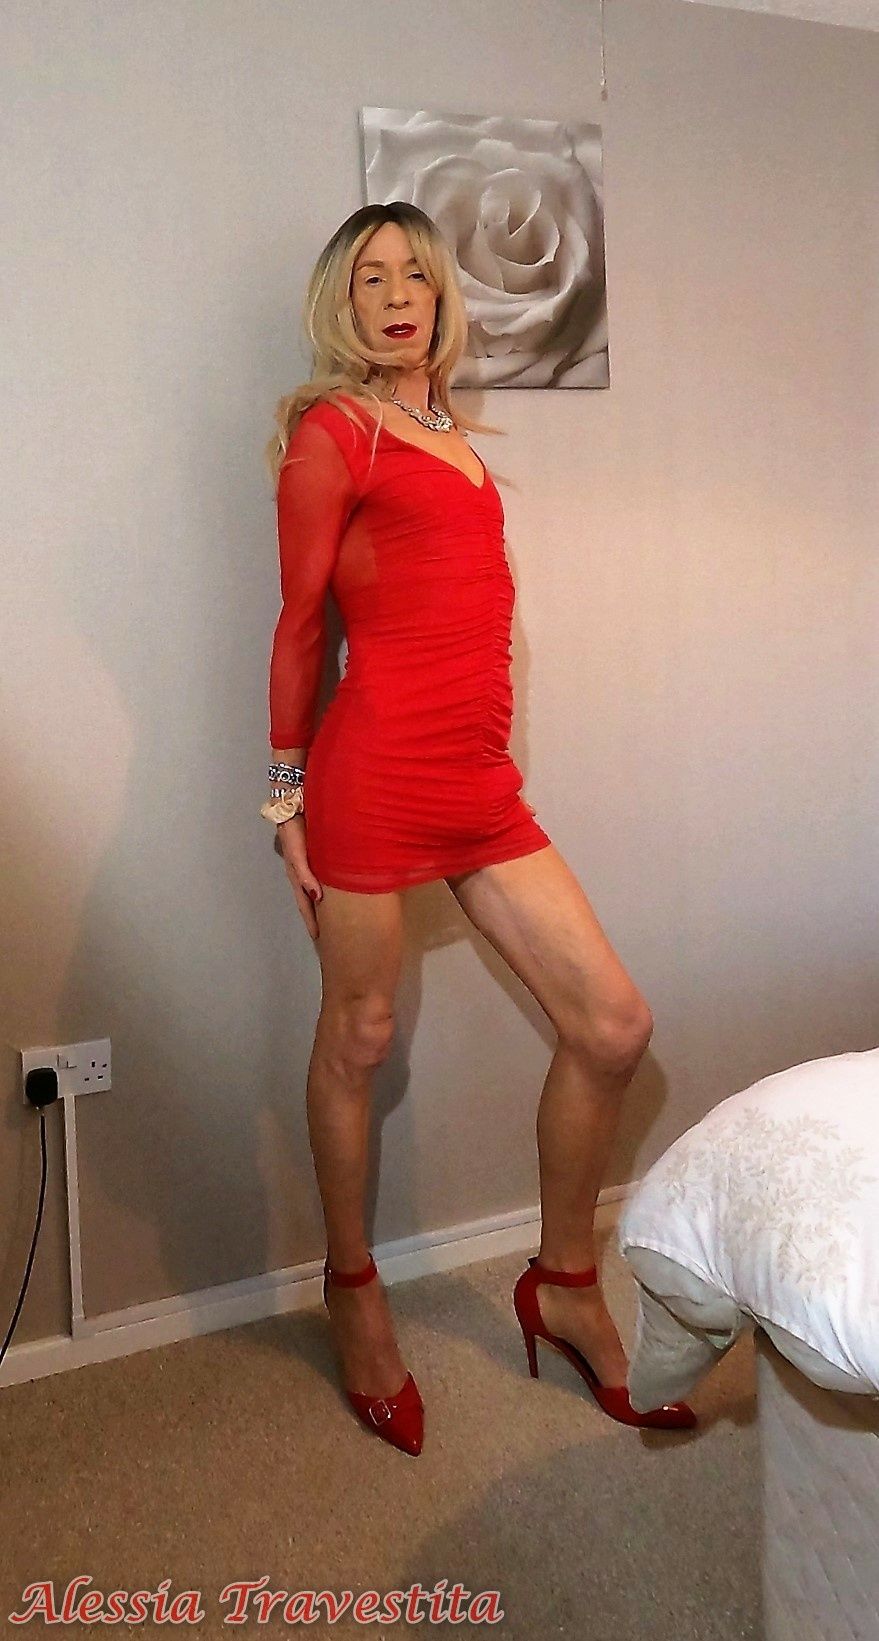 64 Alessia Travestita in Sheer Red Dress #21